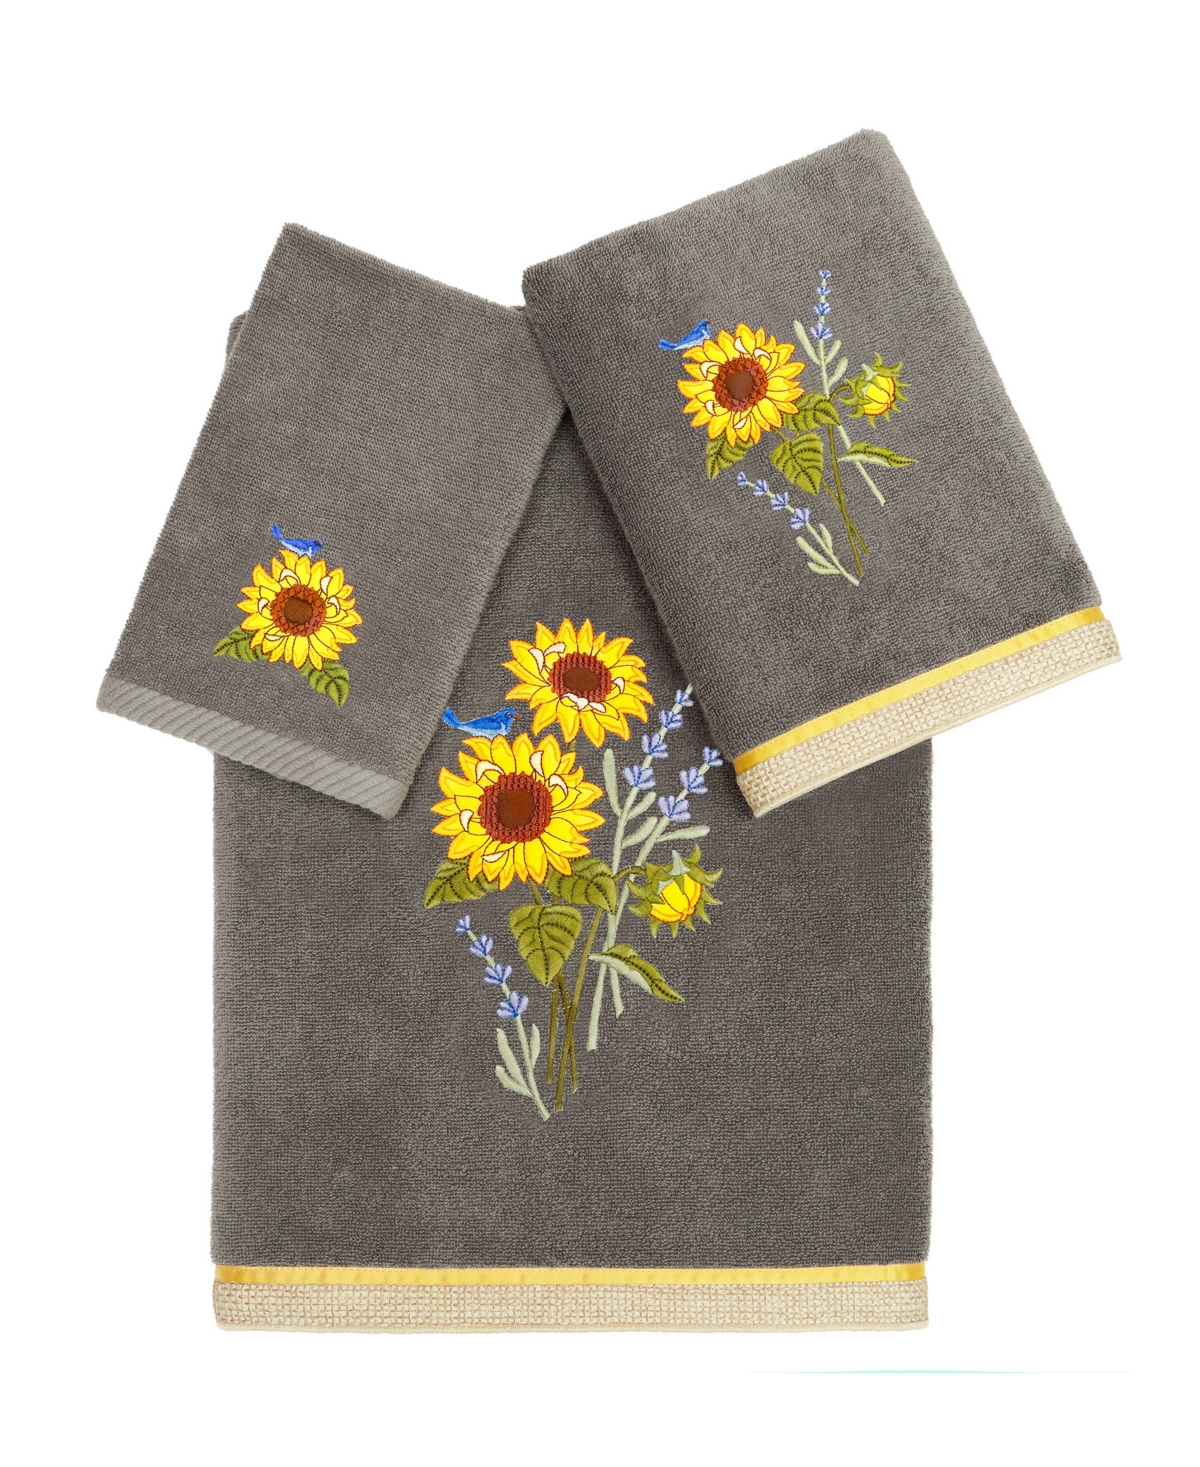 Linum Home Textiles Turkish Cotton Girasol Embellished Towel Set, 3 Piece Bedding In Charcoal